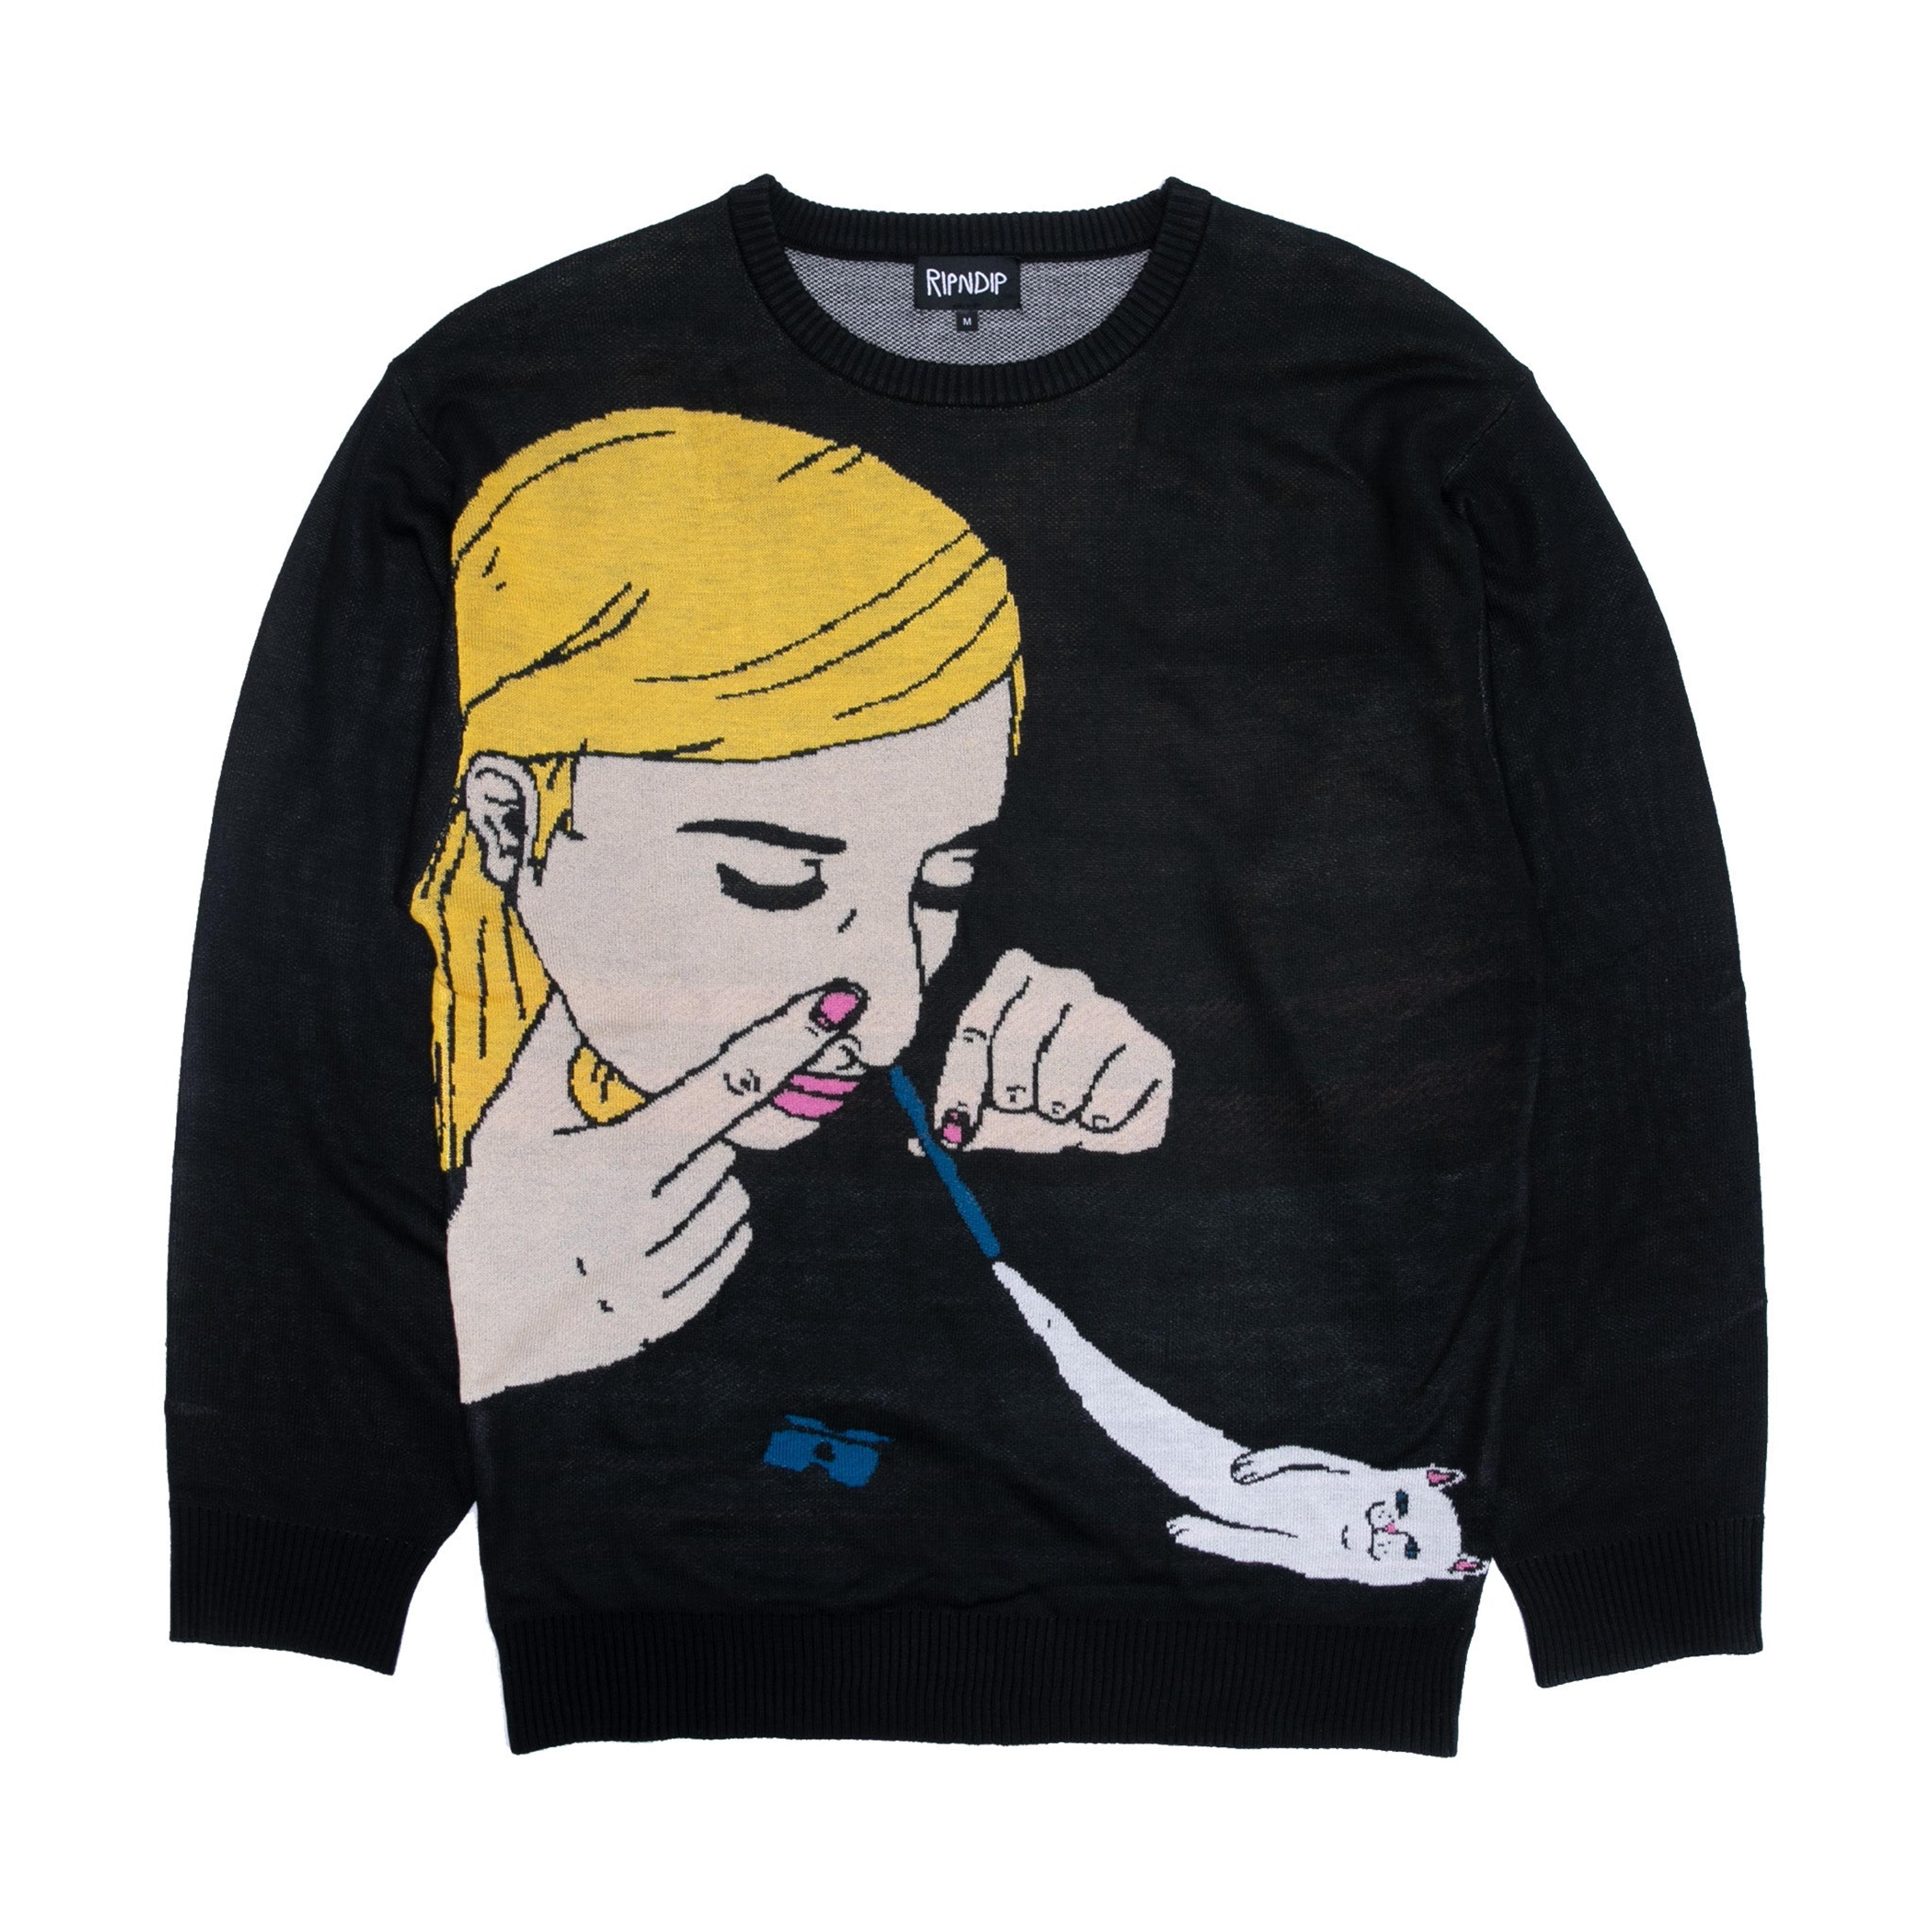 Coconerm Knit Sweater (Black)